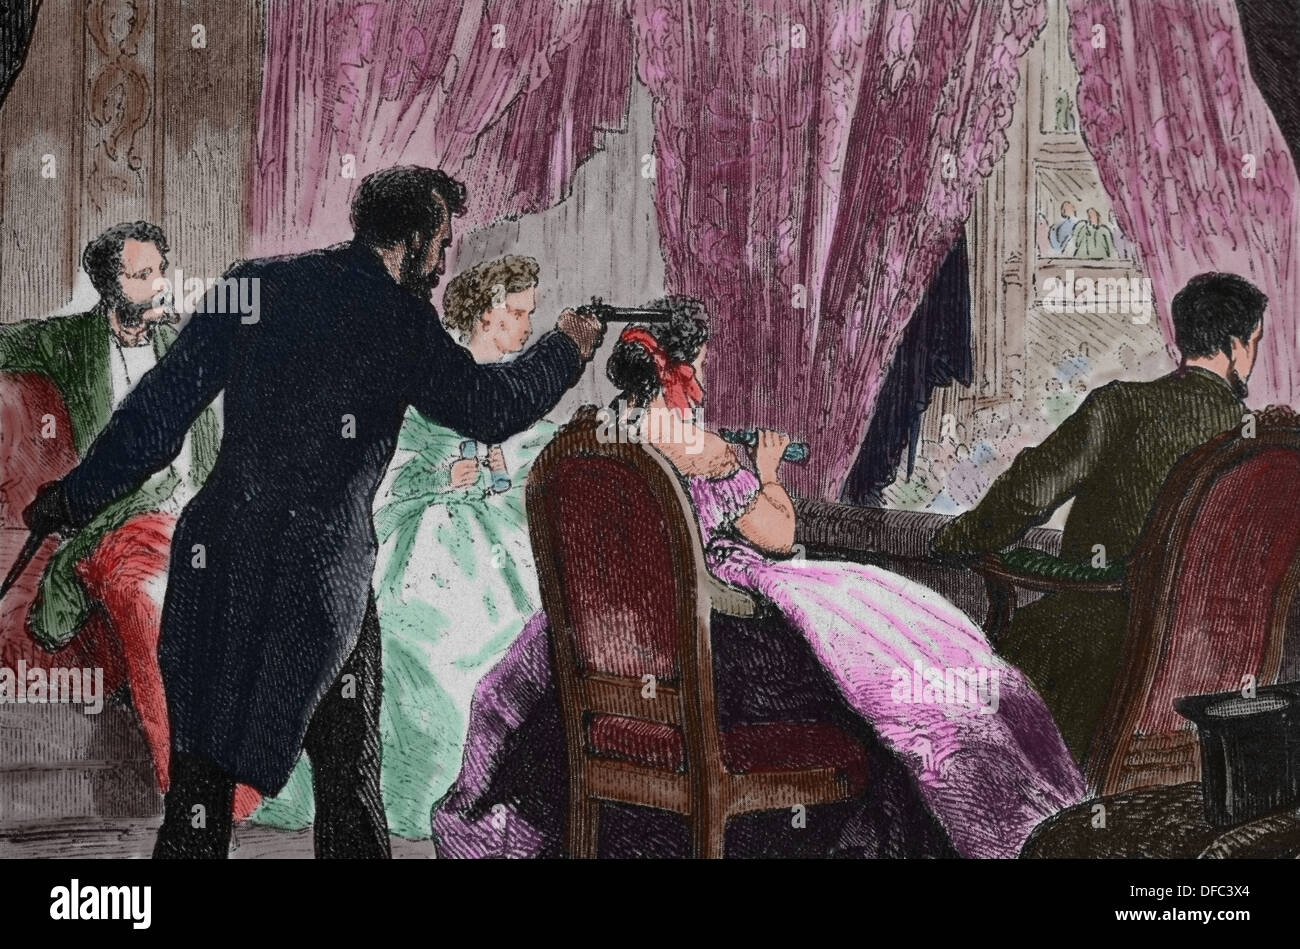 Die Ermordung von Präsident Lincoln. Farbige Gravur. Ford Theater, 14. April 1865. Stockfoto